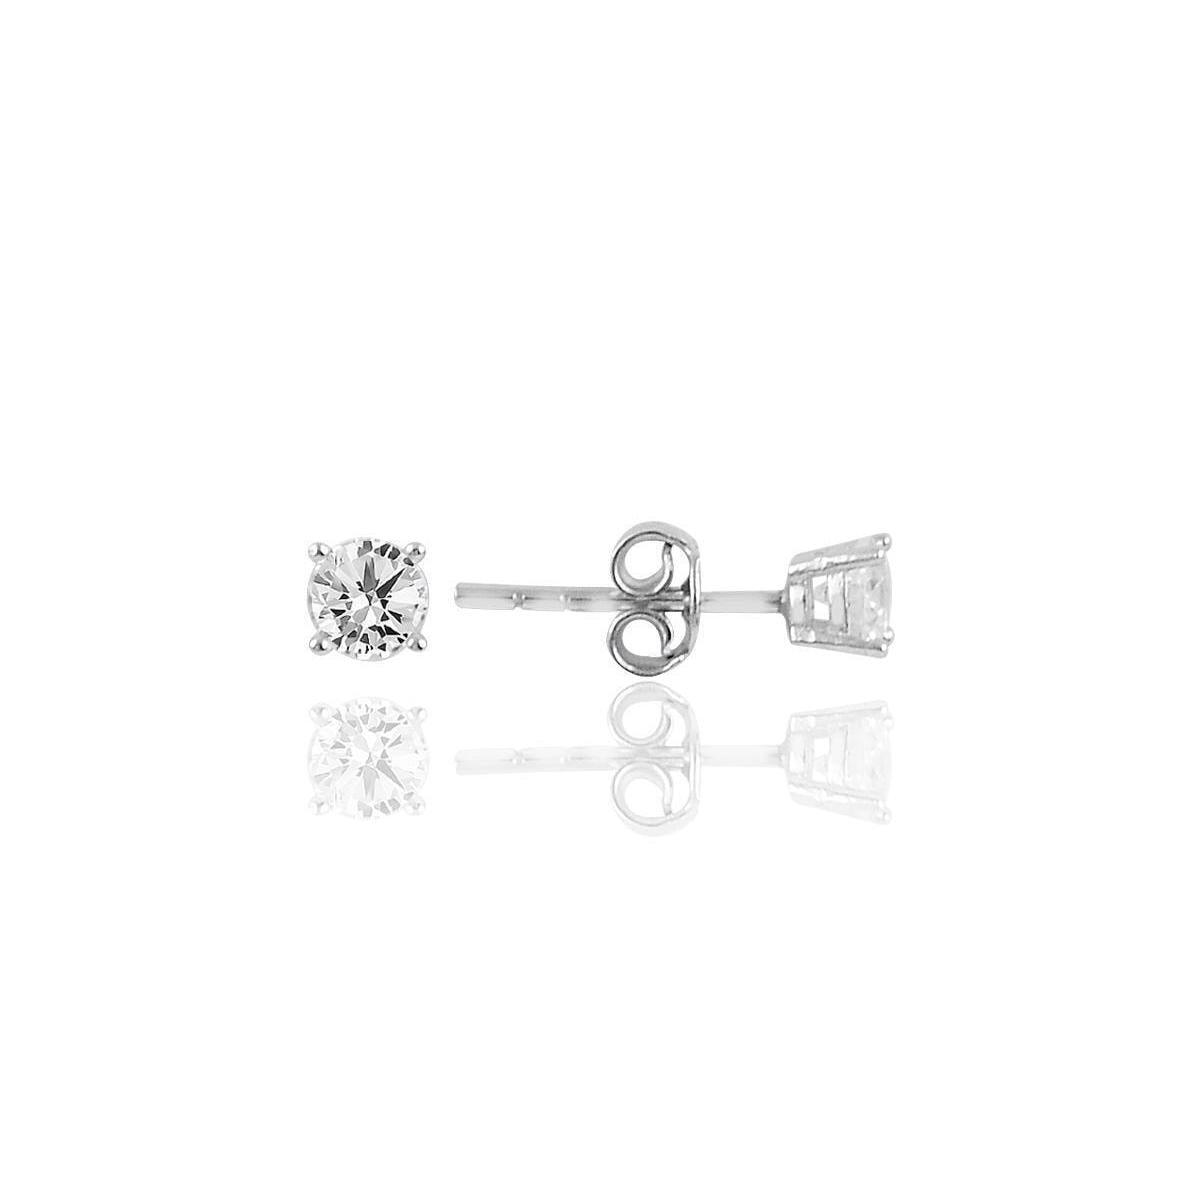 Best Diamond Solitaire Earrings • Solitaire Diamond Stud Earrings - Trending Silver Gifts